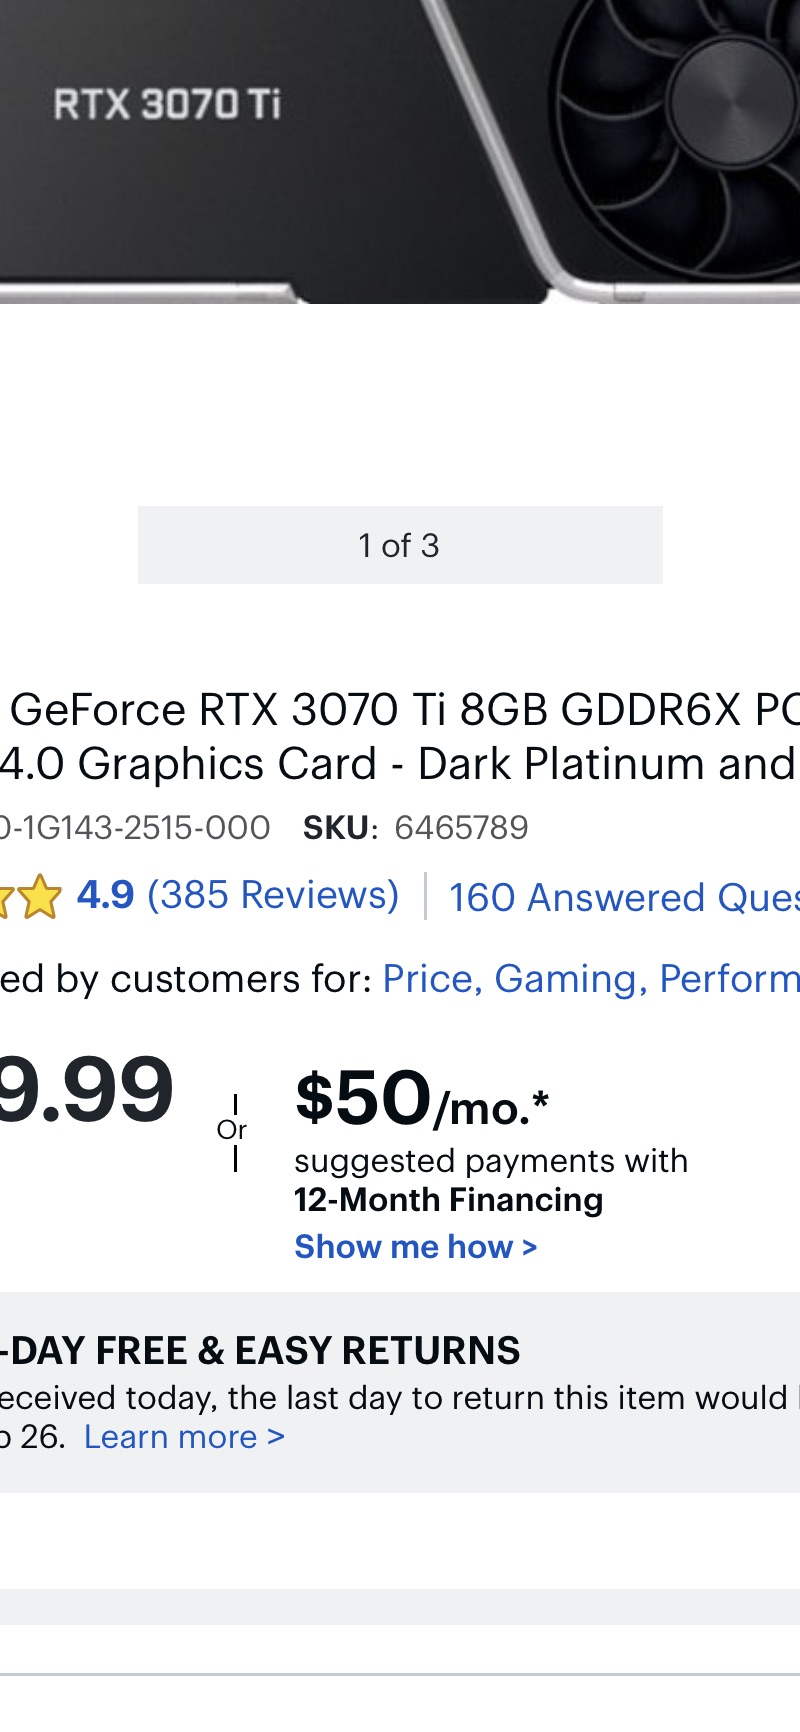 NVIDIA GeForce RTX 3070 Ti 8GB GDDR6X PCI Express 4.0 Graphics Card Dark Platinum and Black 900-1G143-2515-000 - Best Buy现货